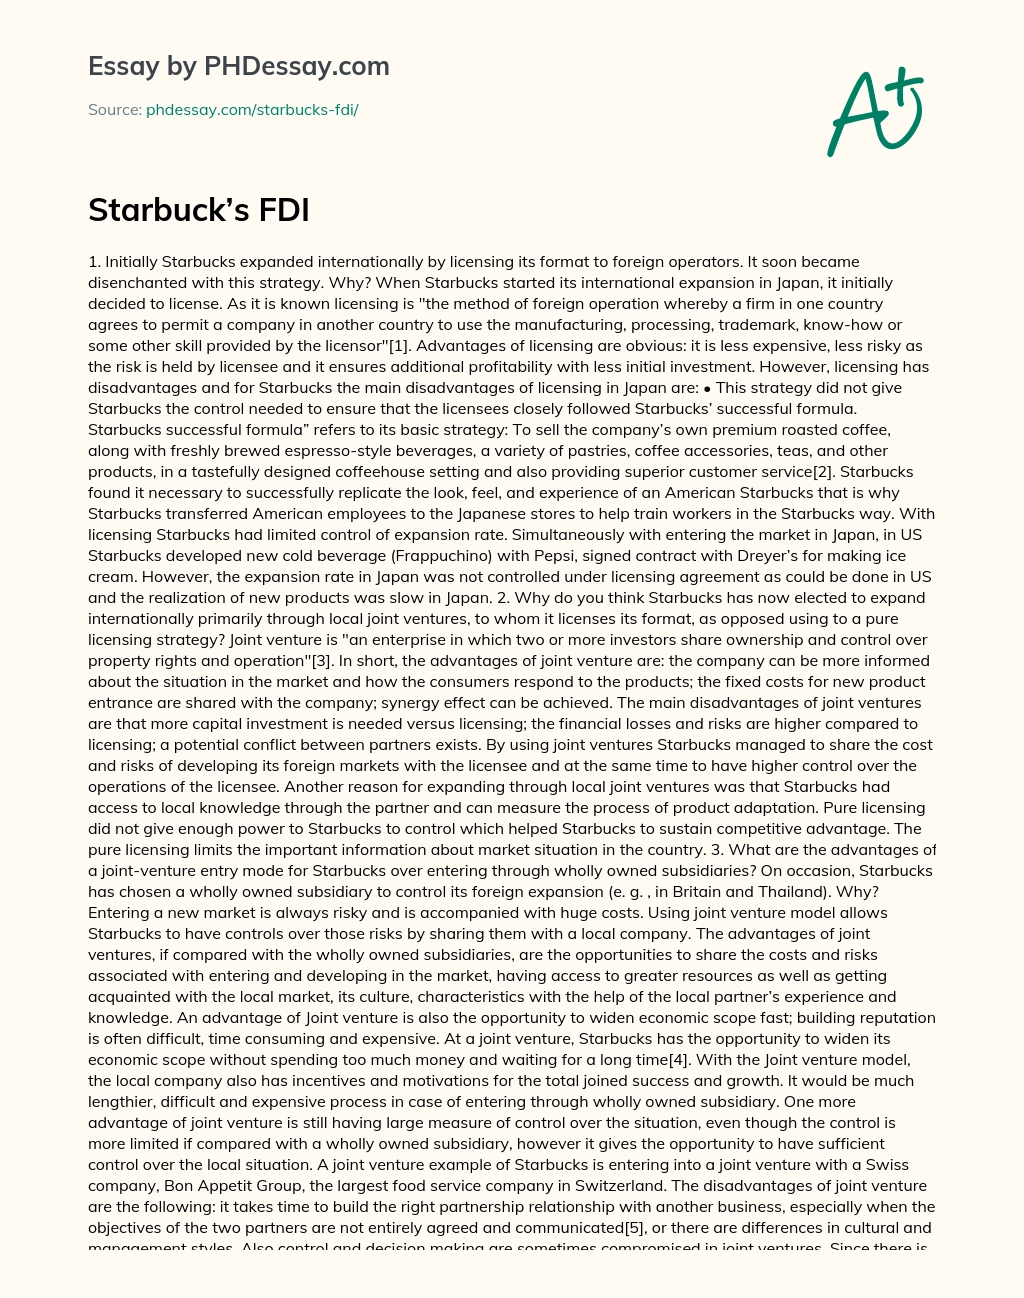 Starbuck’s FDI essay